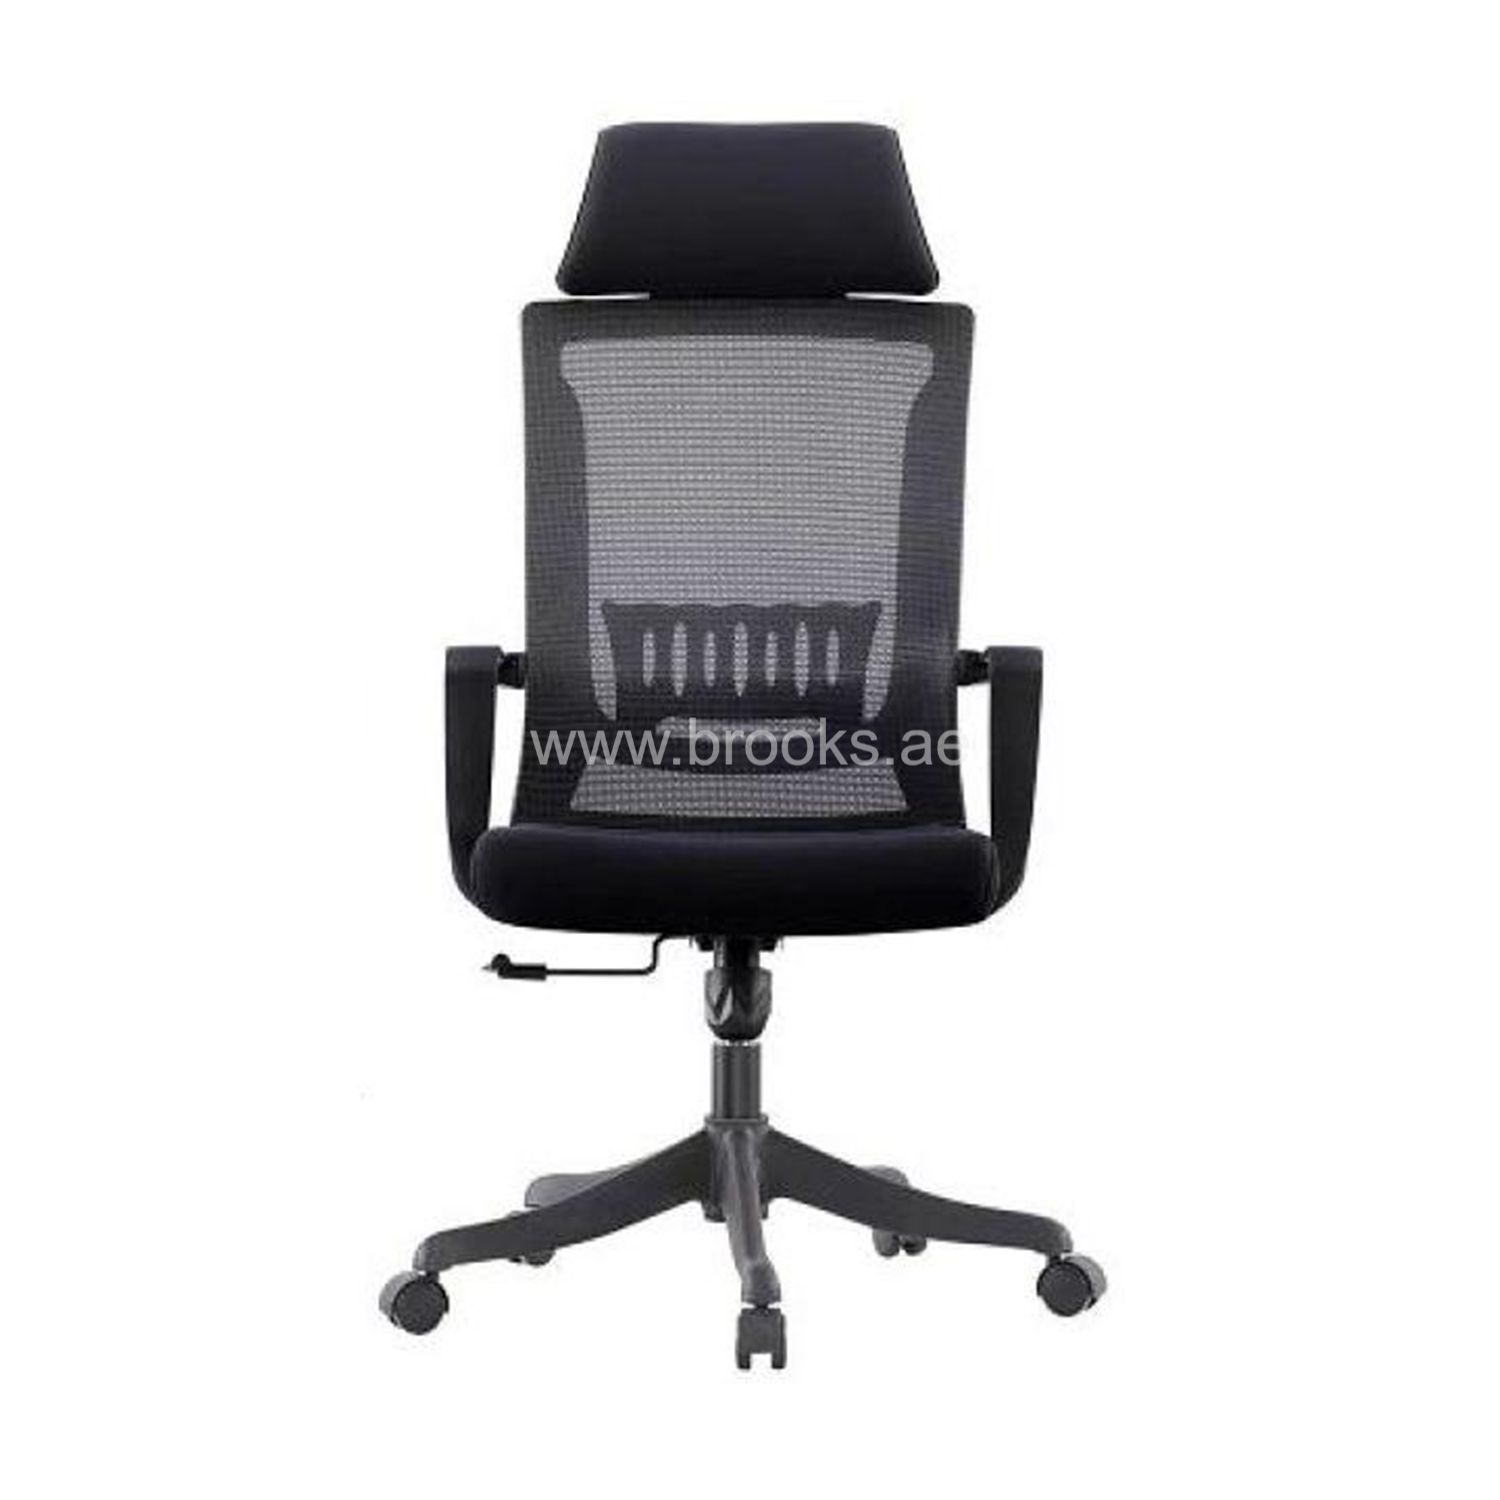 Brooks 540 HB Nylon Base Office Chair